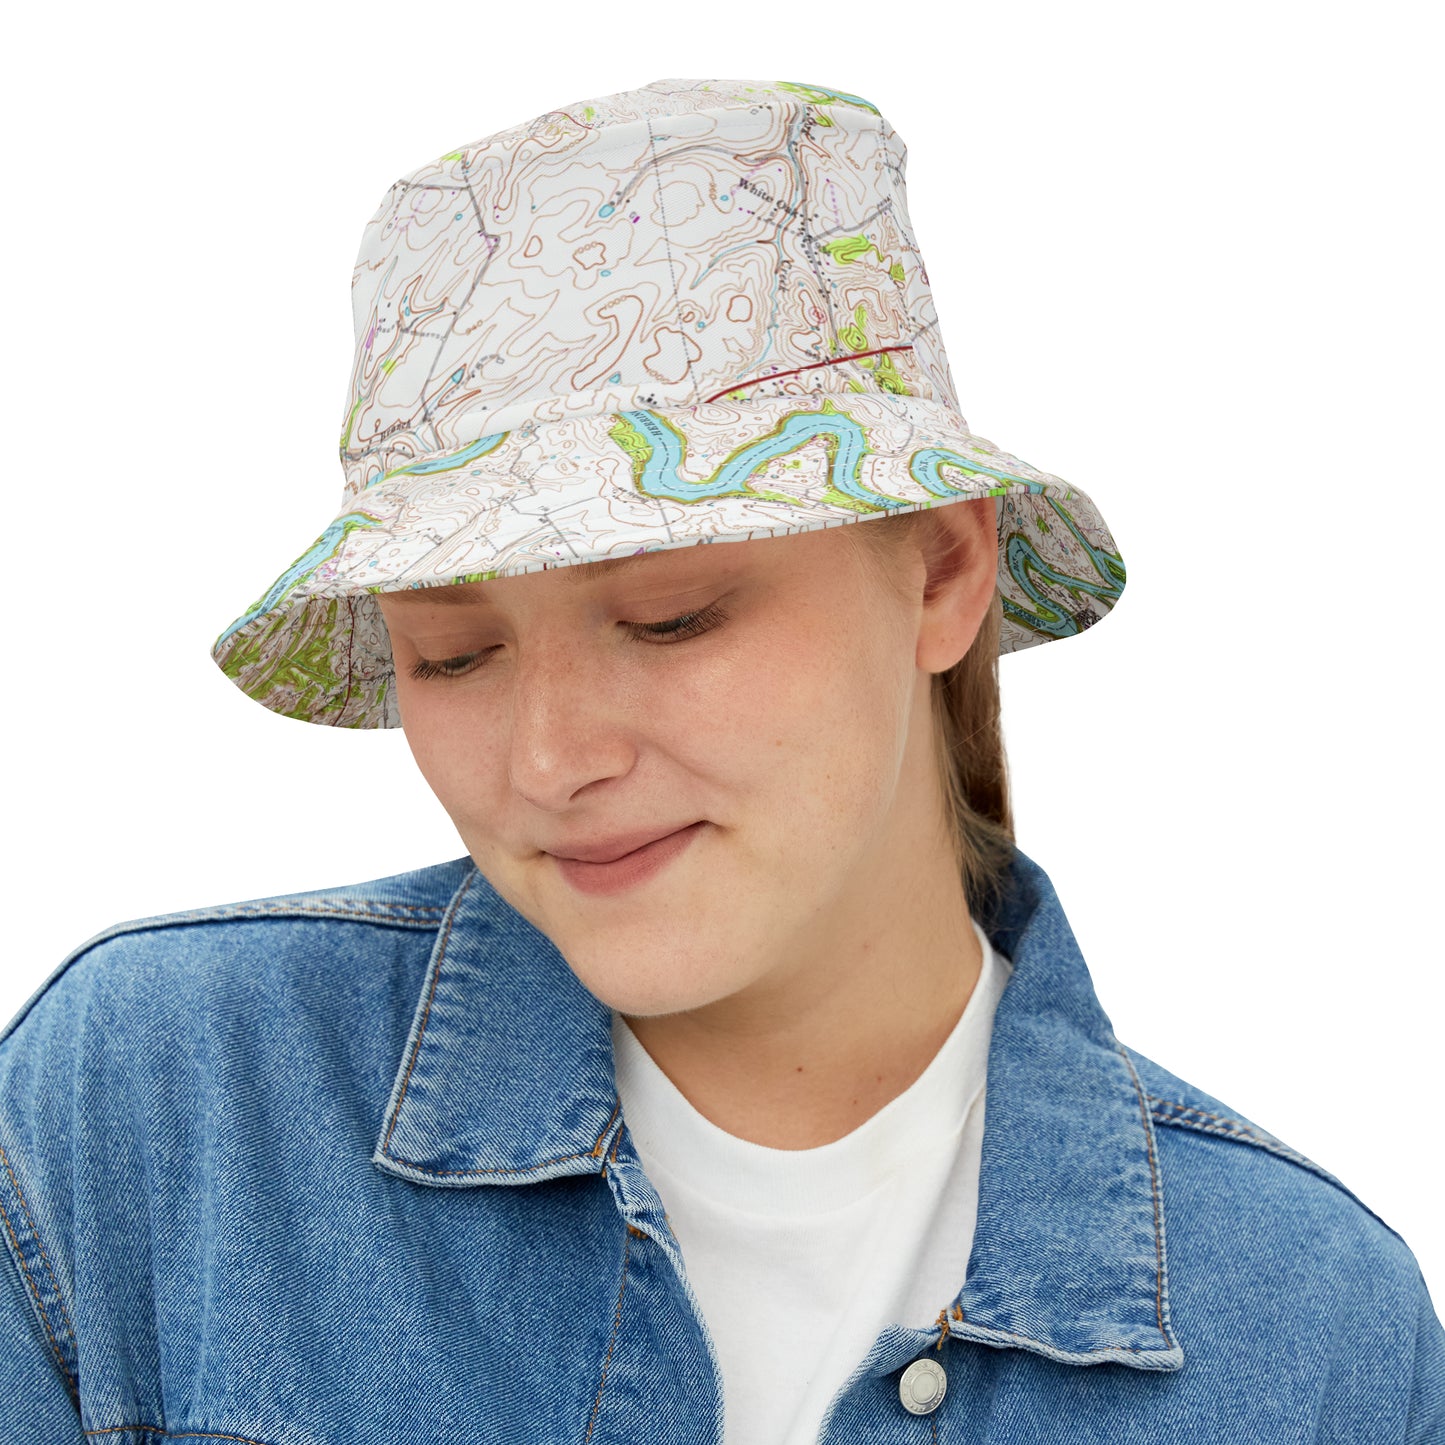 Herrington Lake Topography Map Bucket Hat, Natural Colors